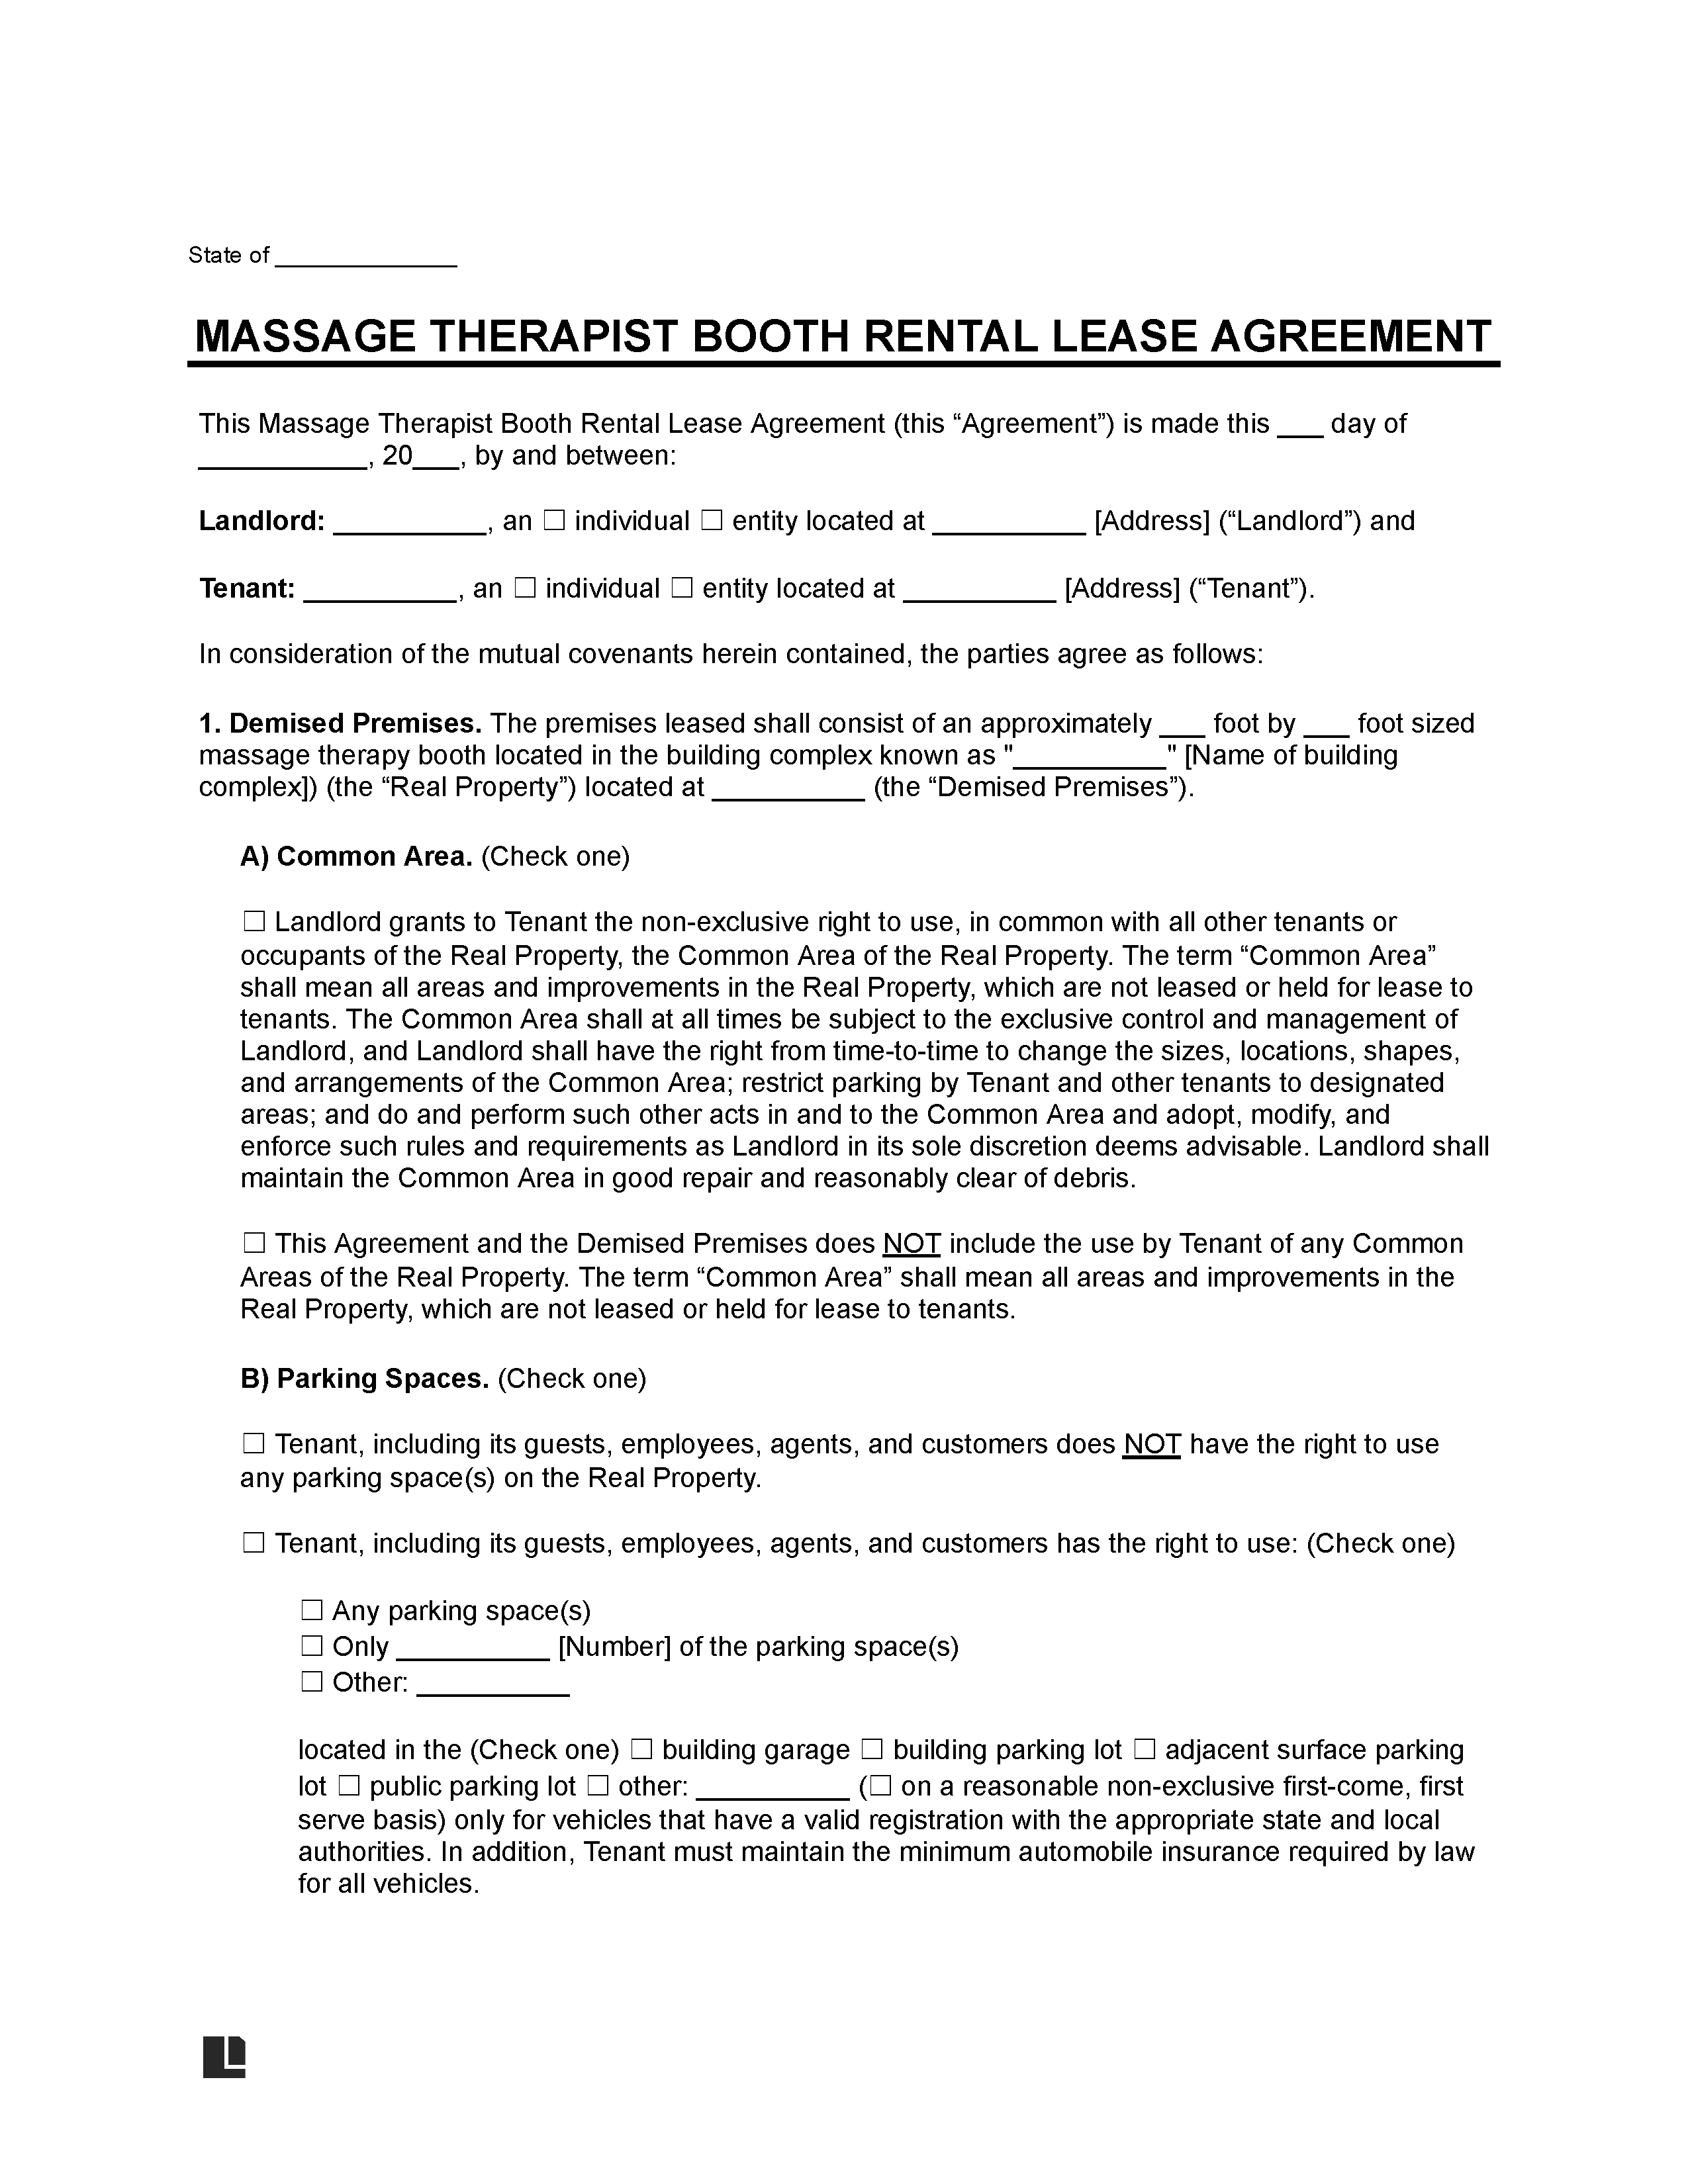 massage therapist booth rental agreement